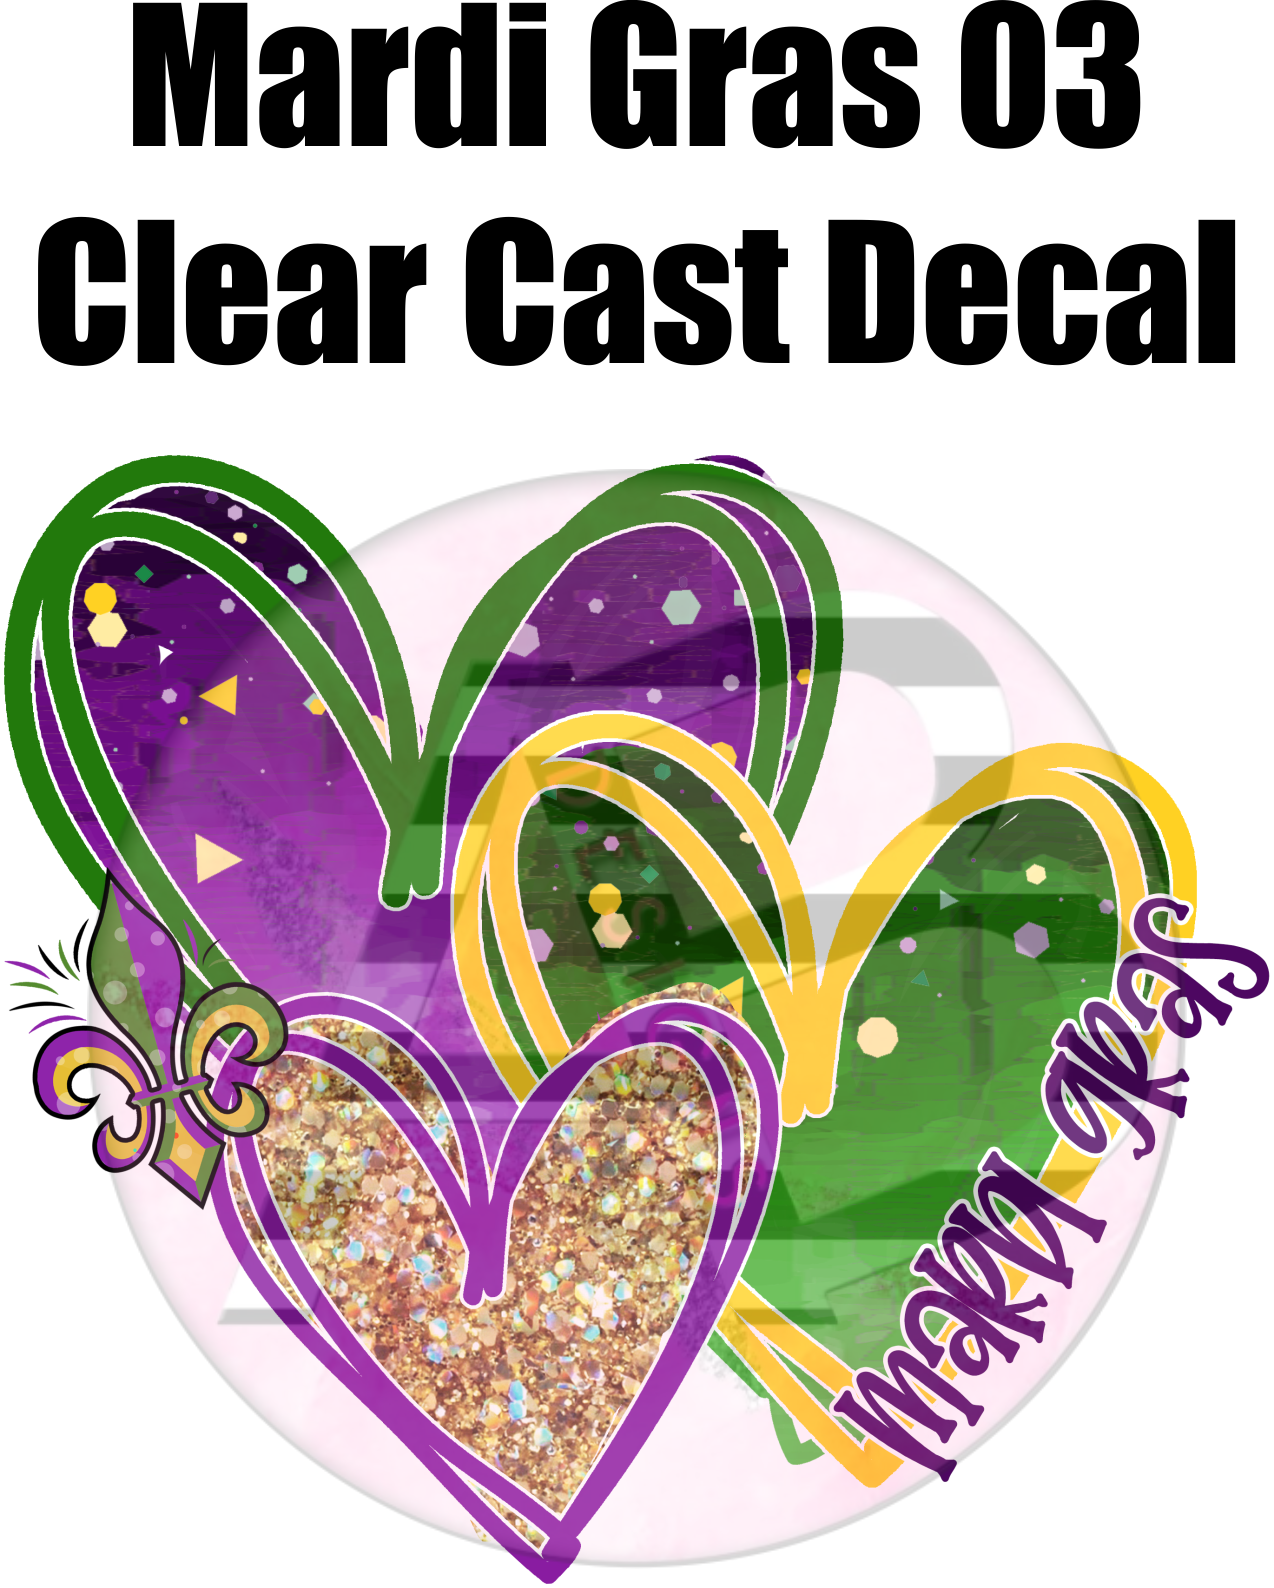 Mardi Gras 03 - Clear Cast Decal